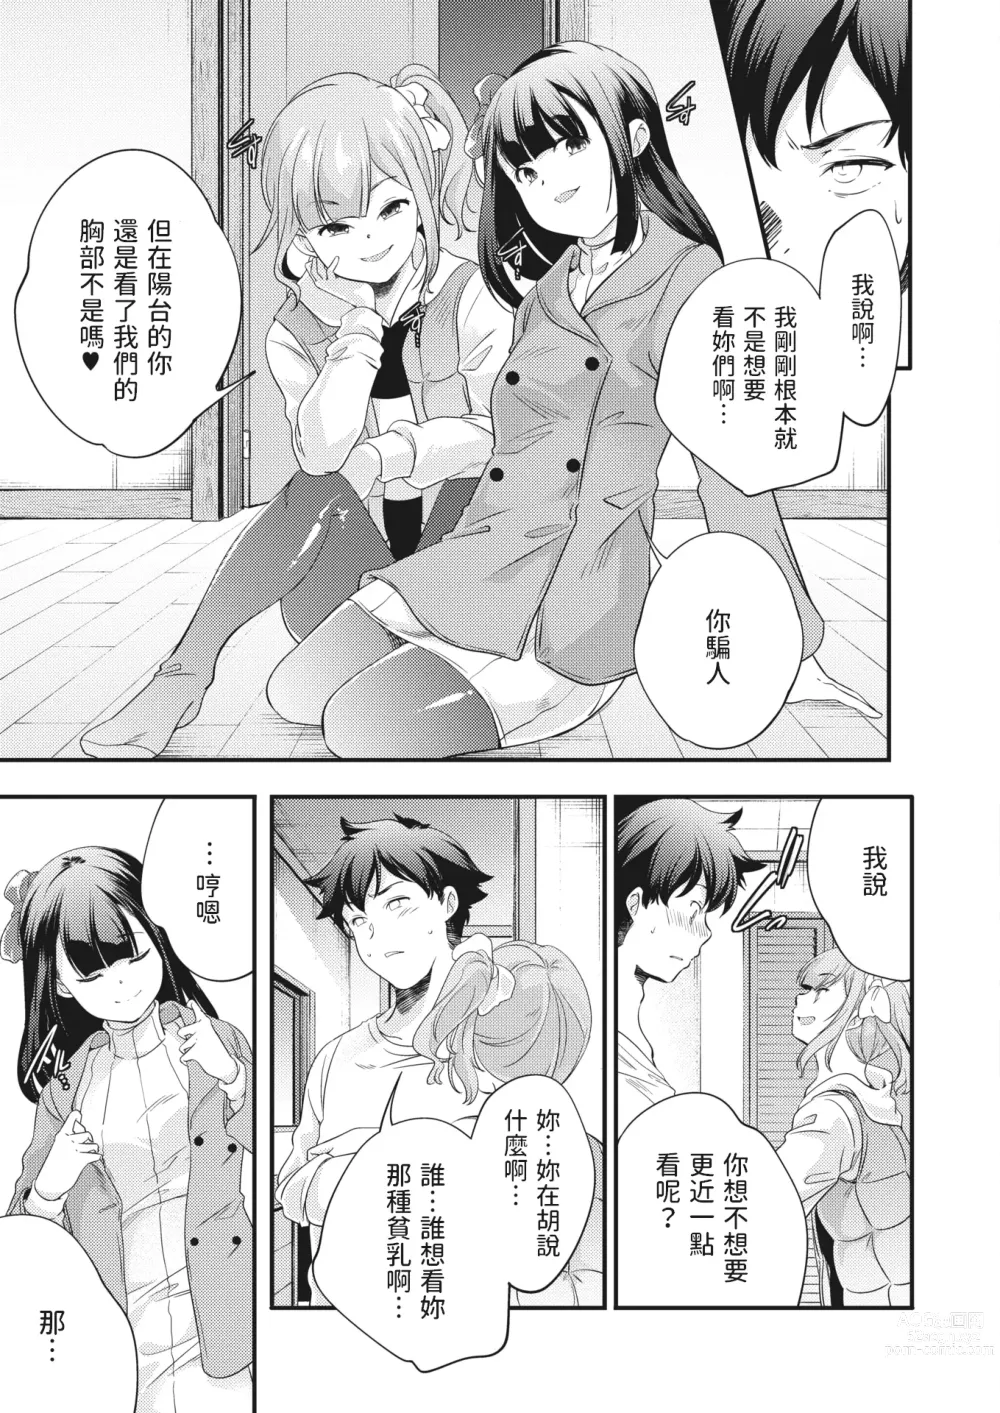 Page 5 of manga Ariadone